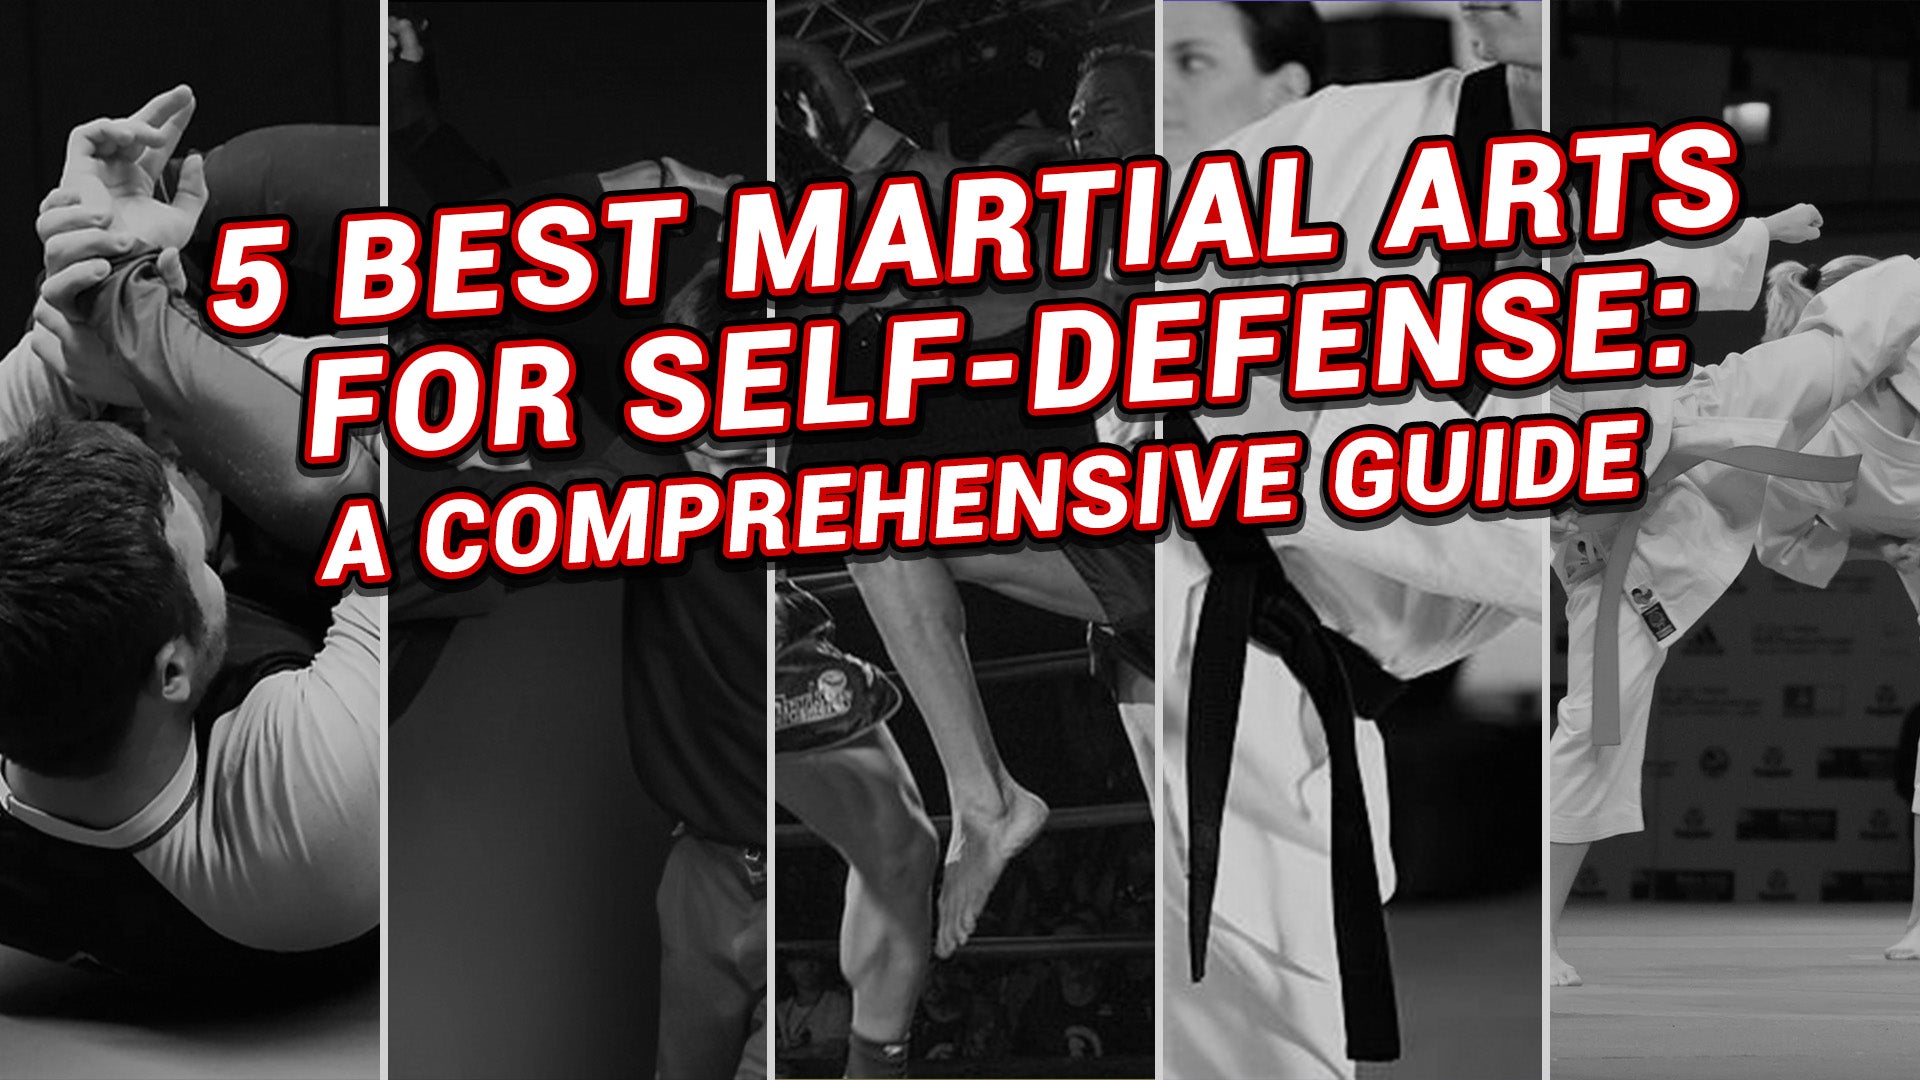 5 Best Martial Arts for Self-Defense: A Comprehensive Guide